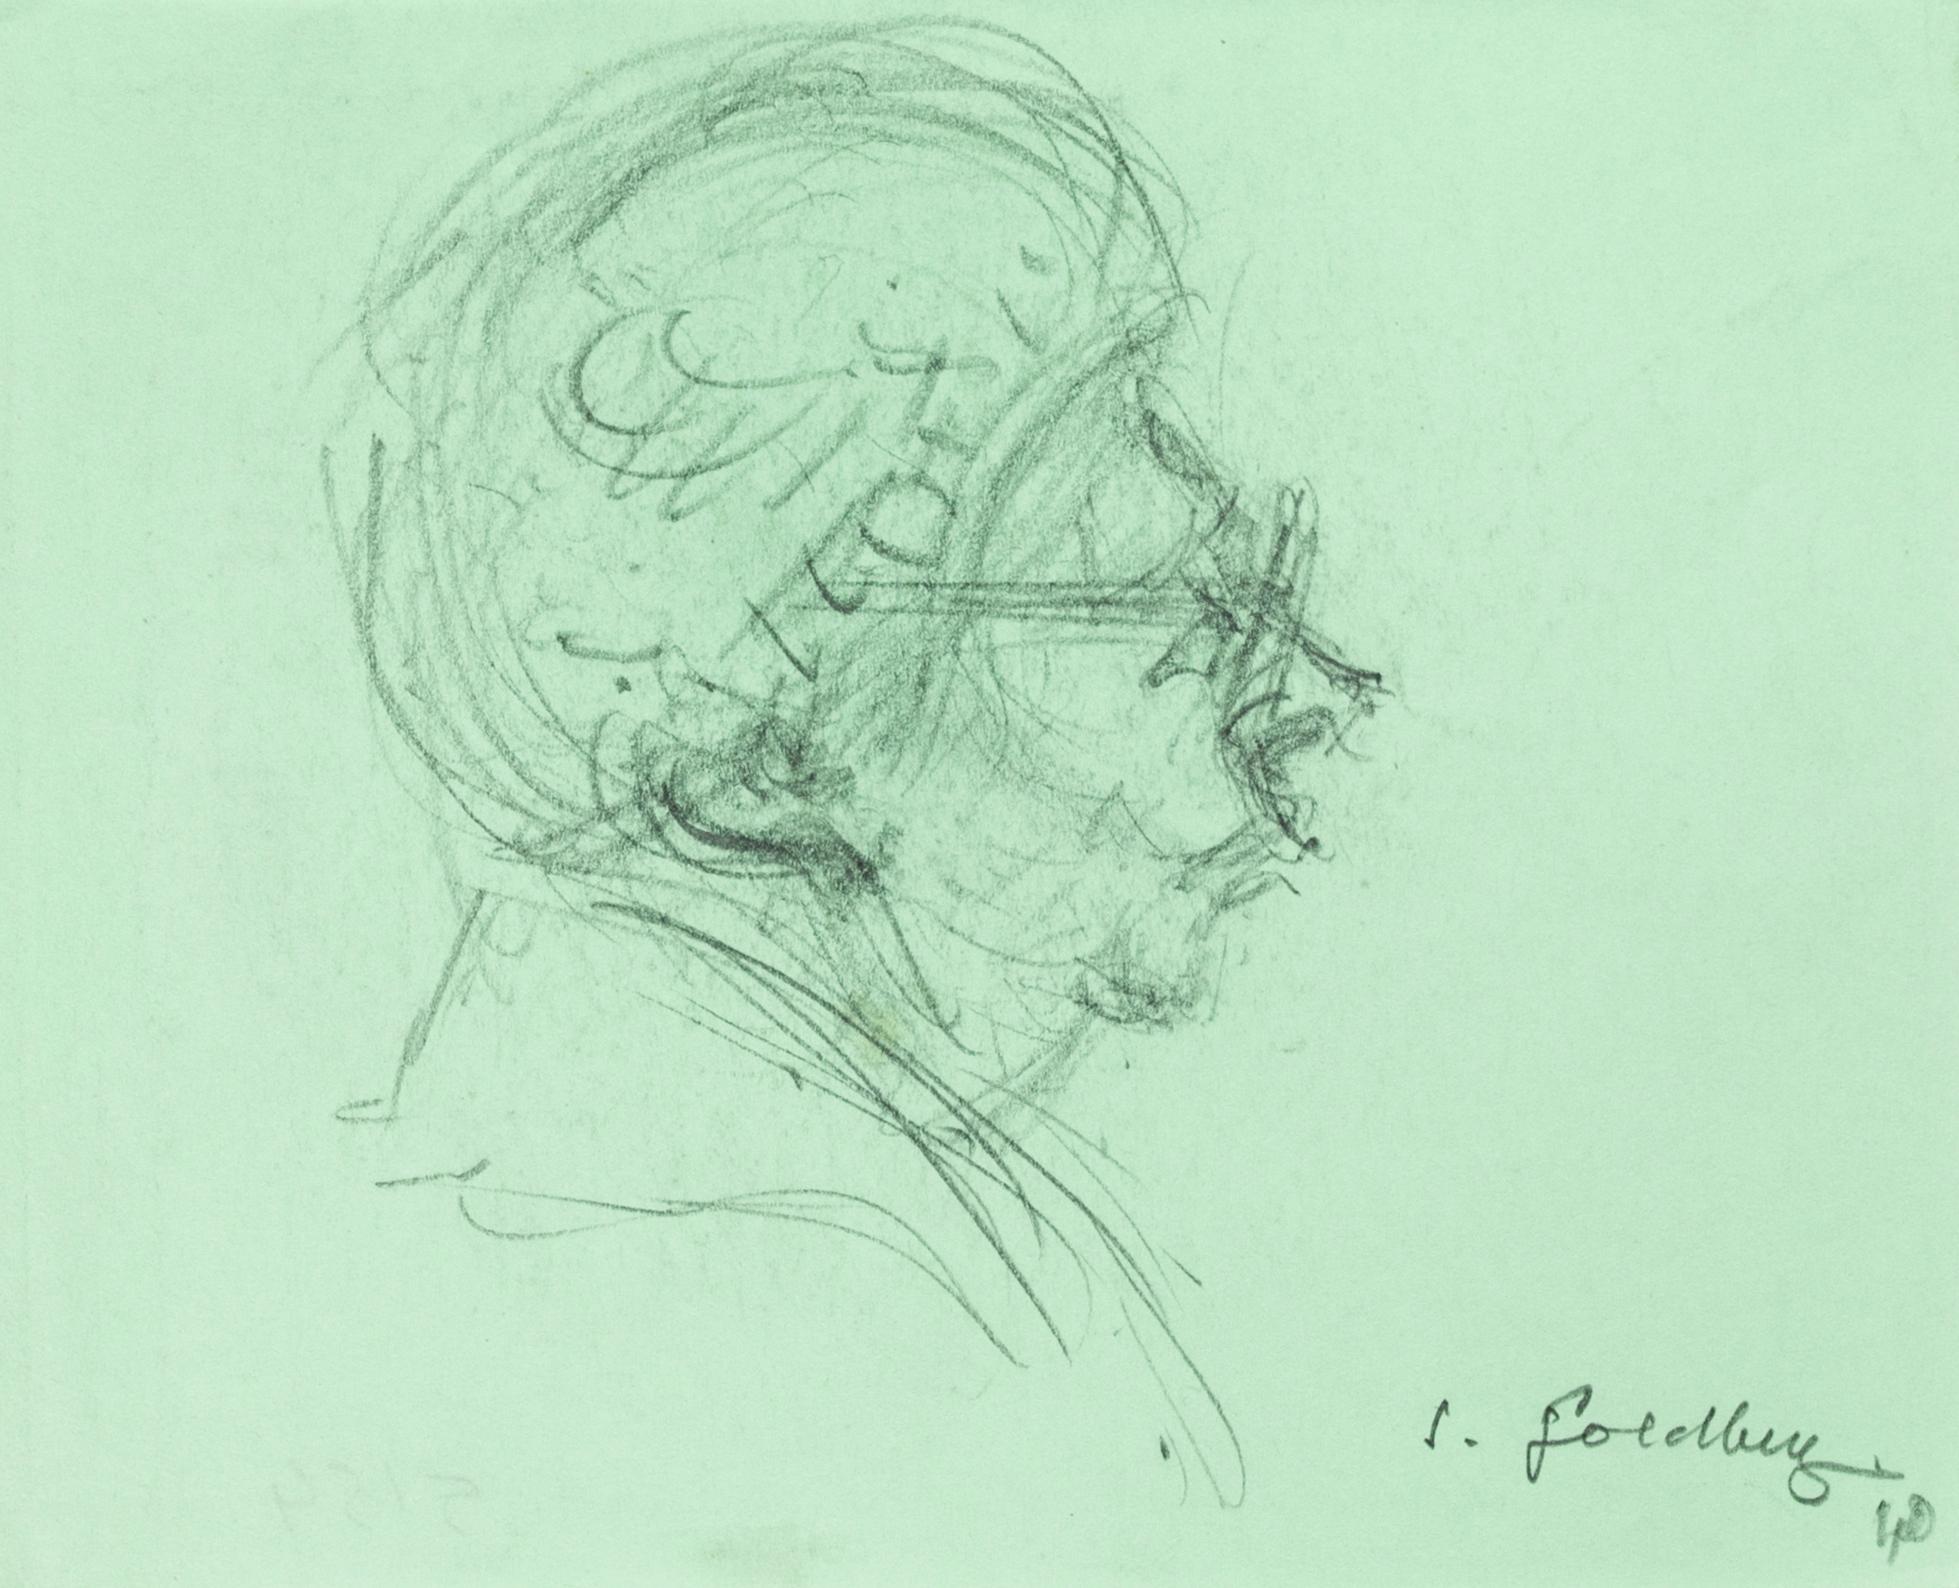 Simon Goldberg Portrait - Old Woman - Original Pencil Drawing by S. Goldberg - Mid 20th Century